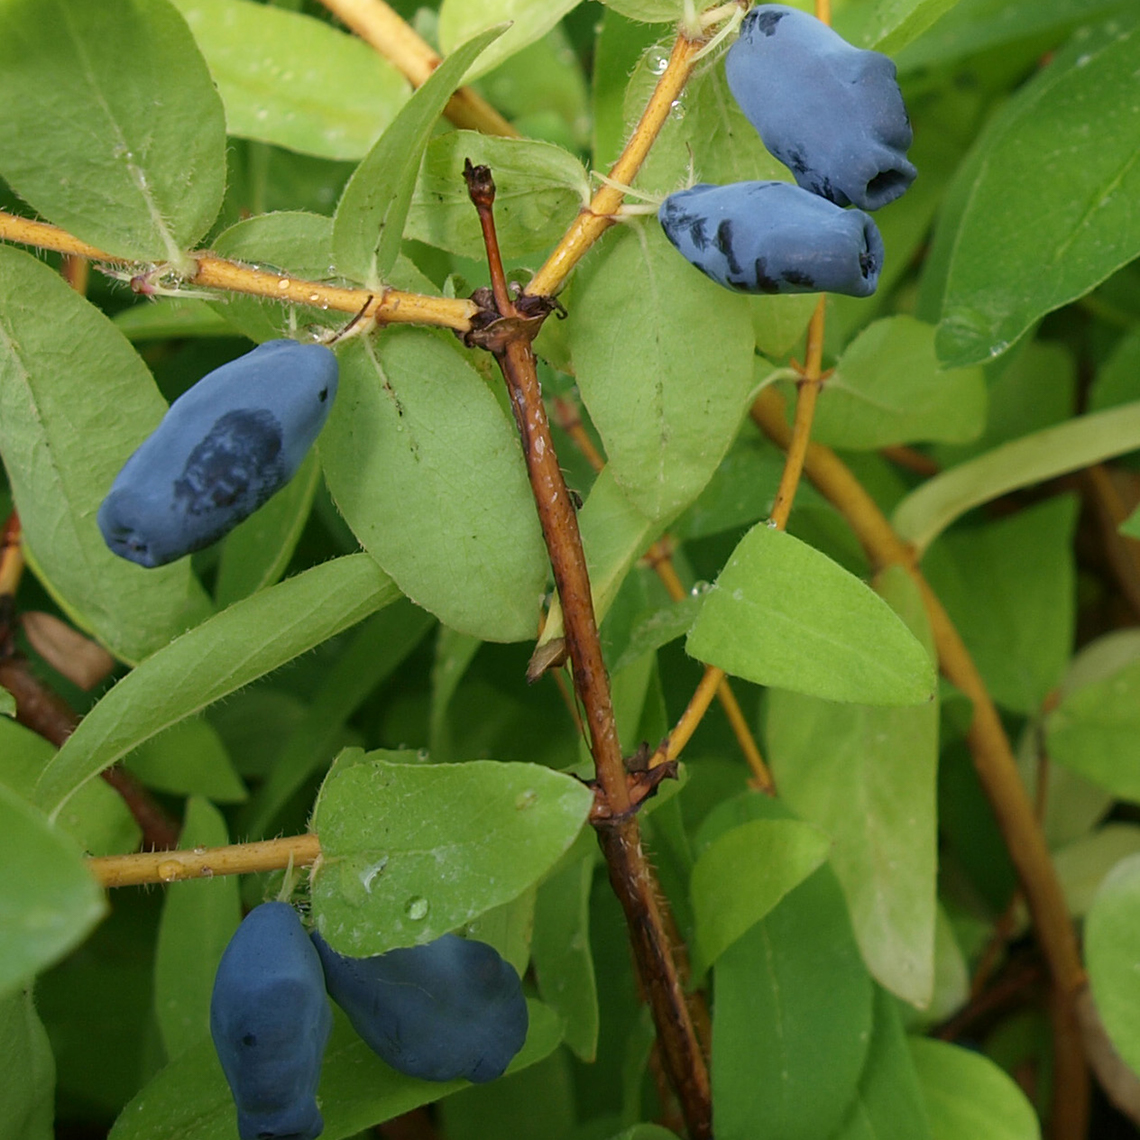 Close up of blue Sugar Mountain Balalaika Lonicera berries and green foliage